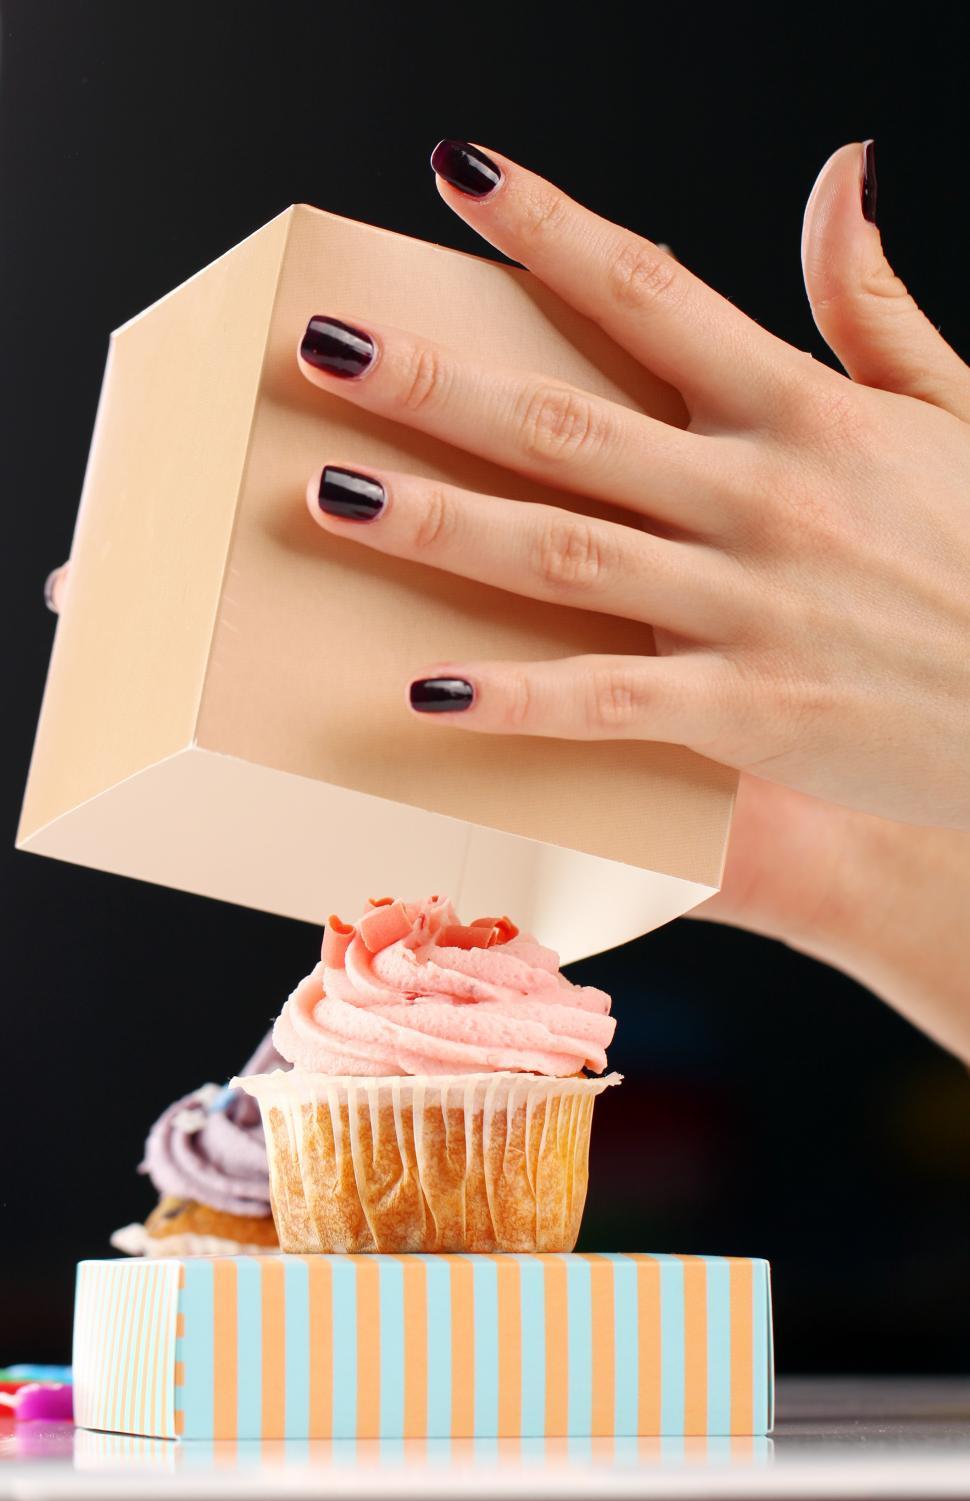 Free Image of Hands reveal a celebratory cupcake 